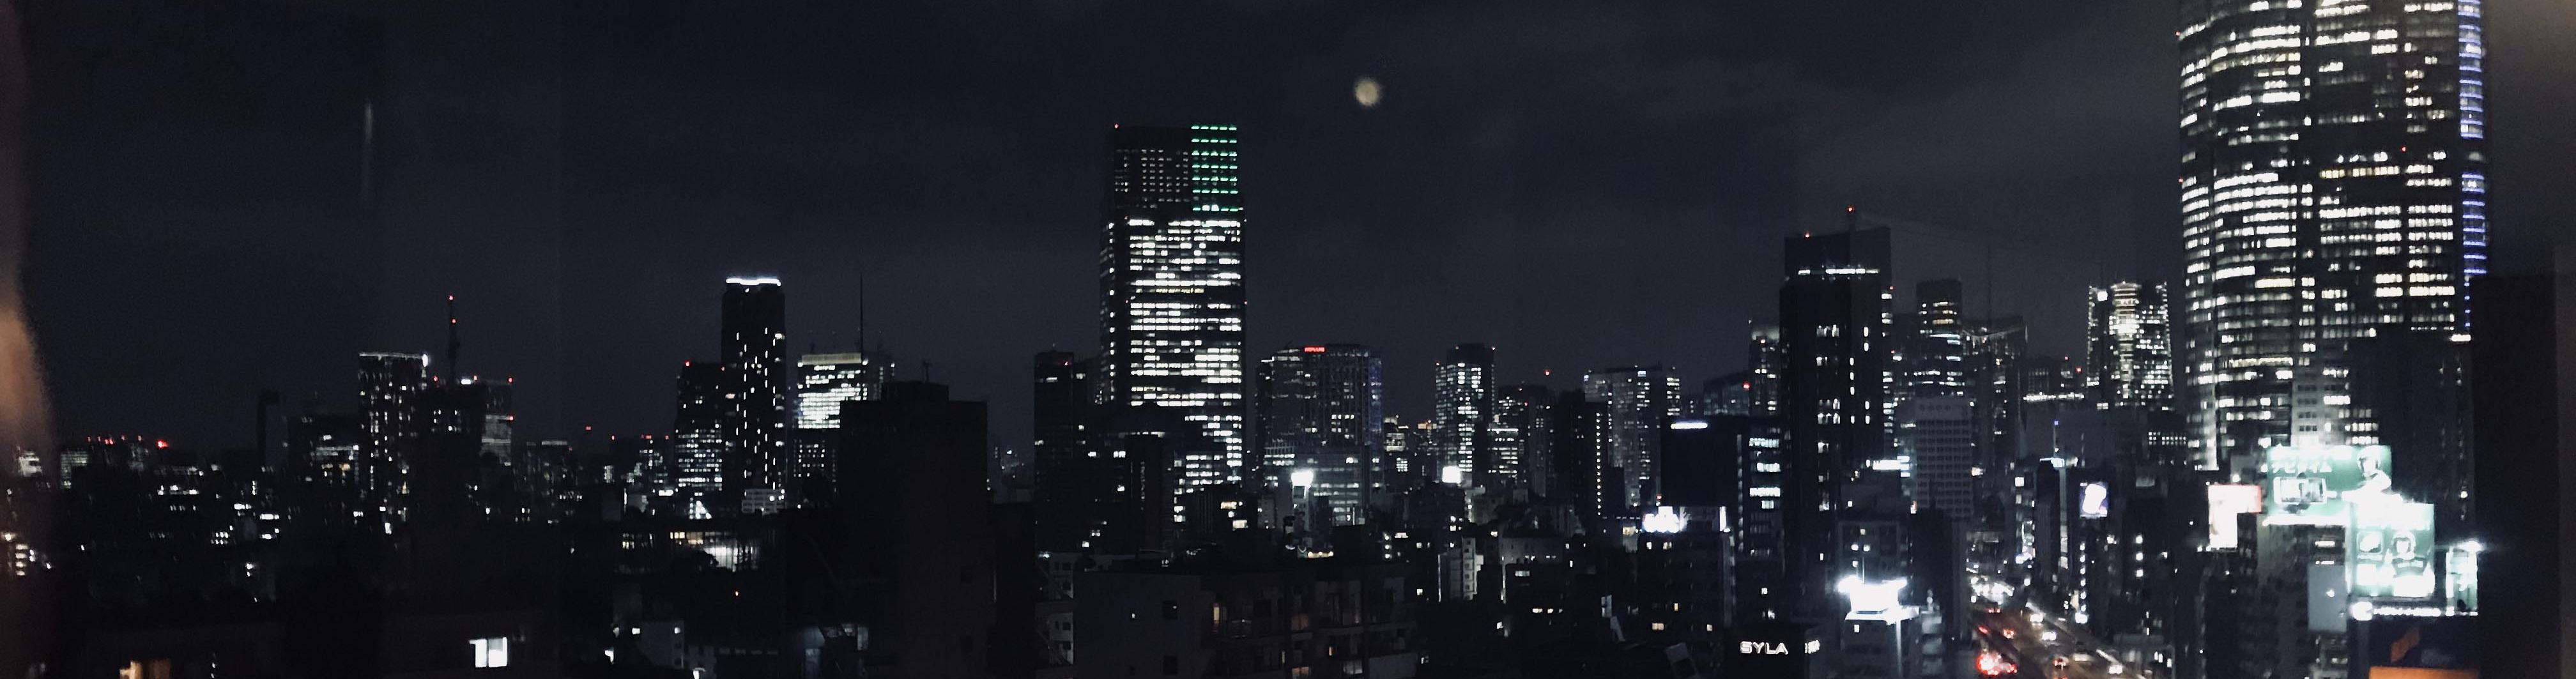 A city lit up at night.